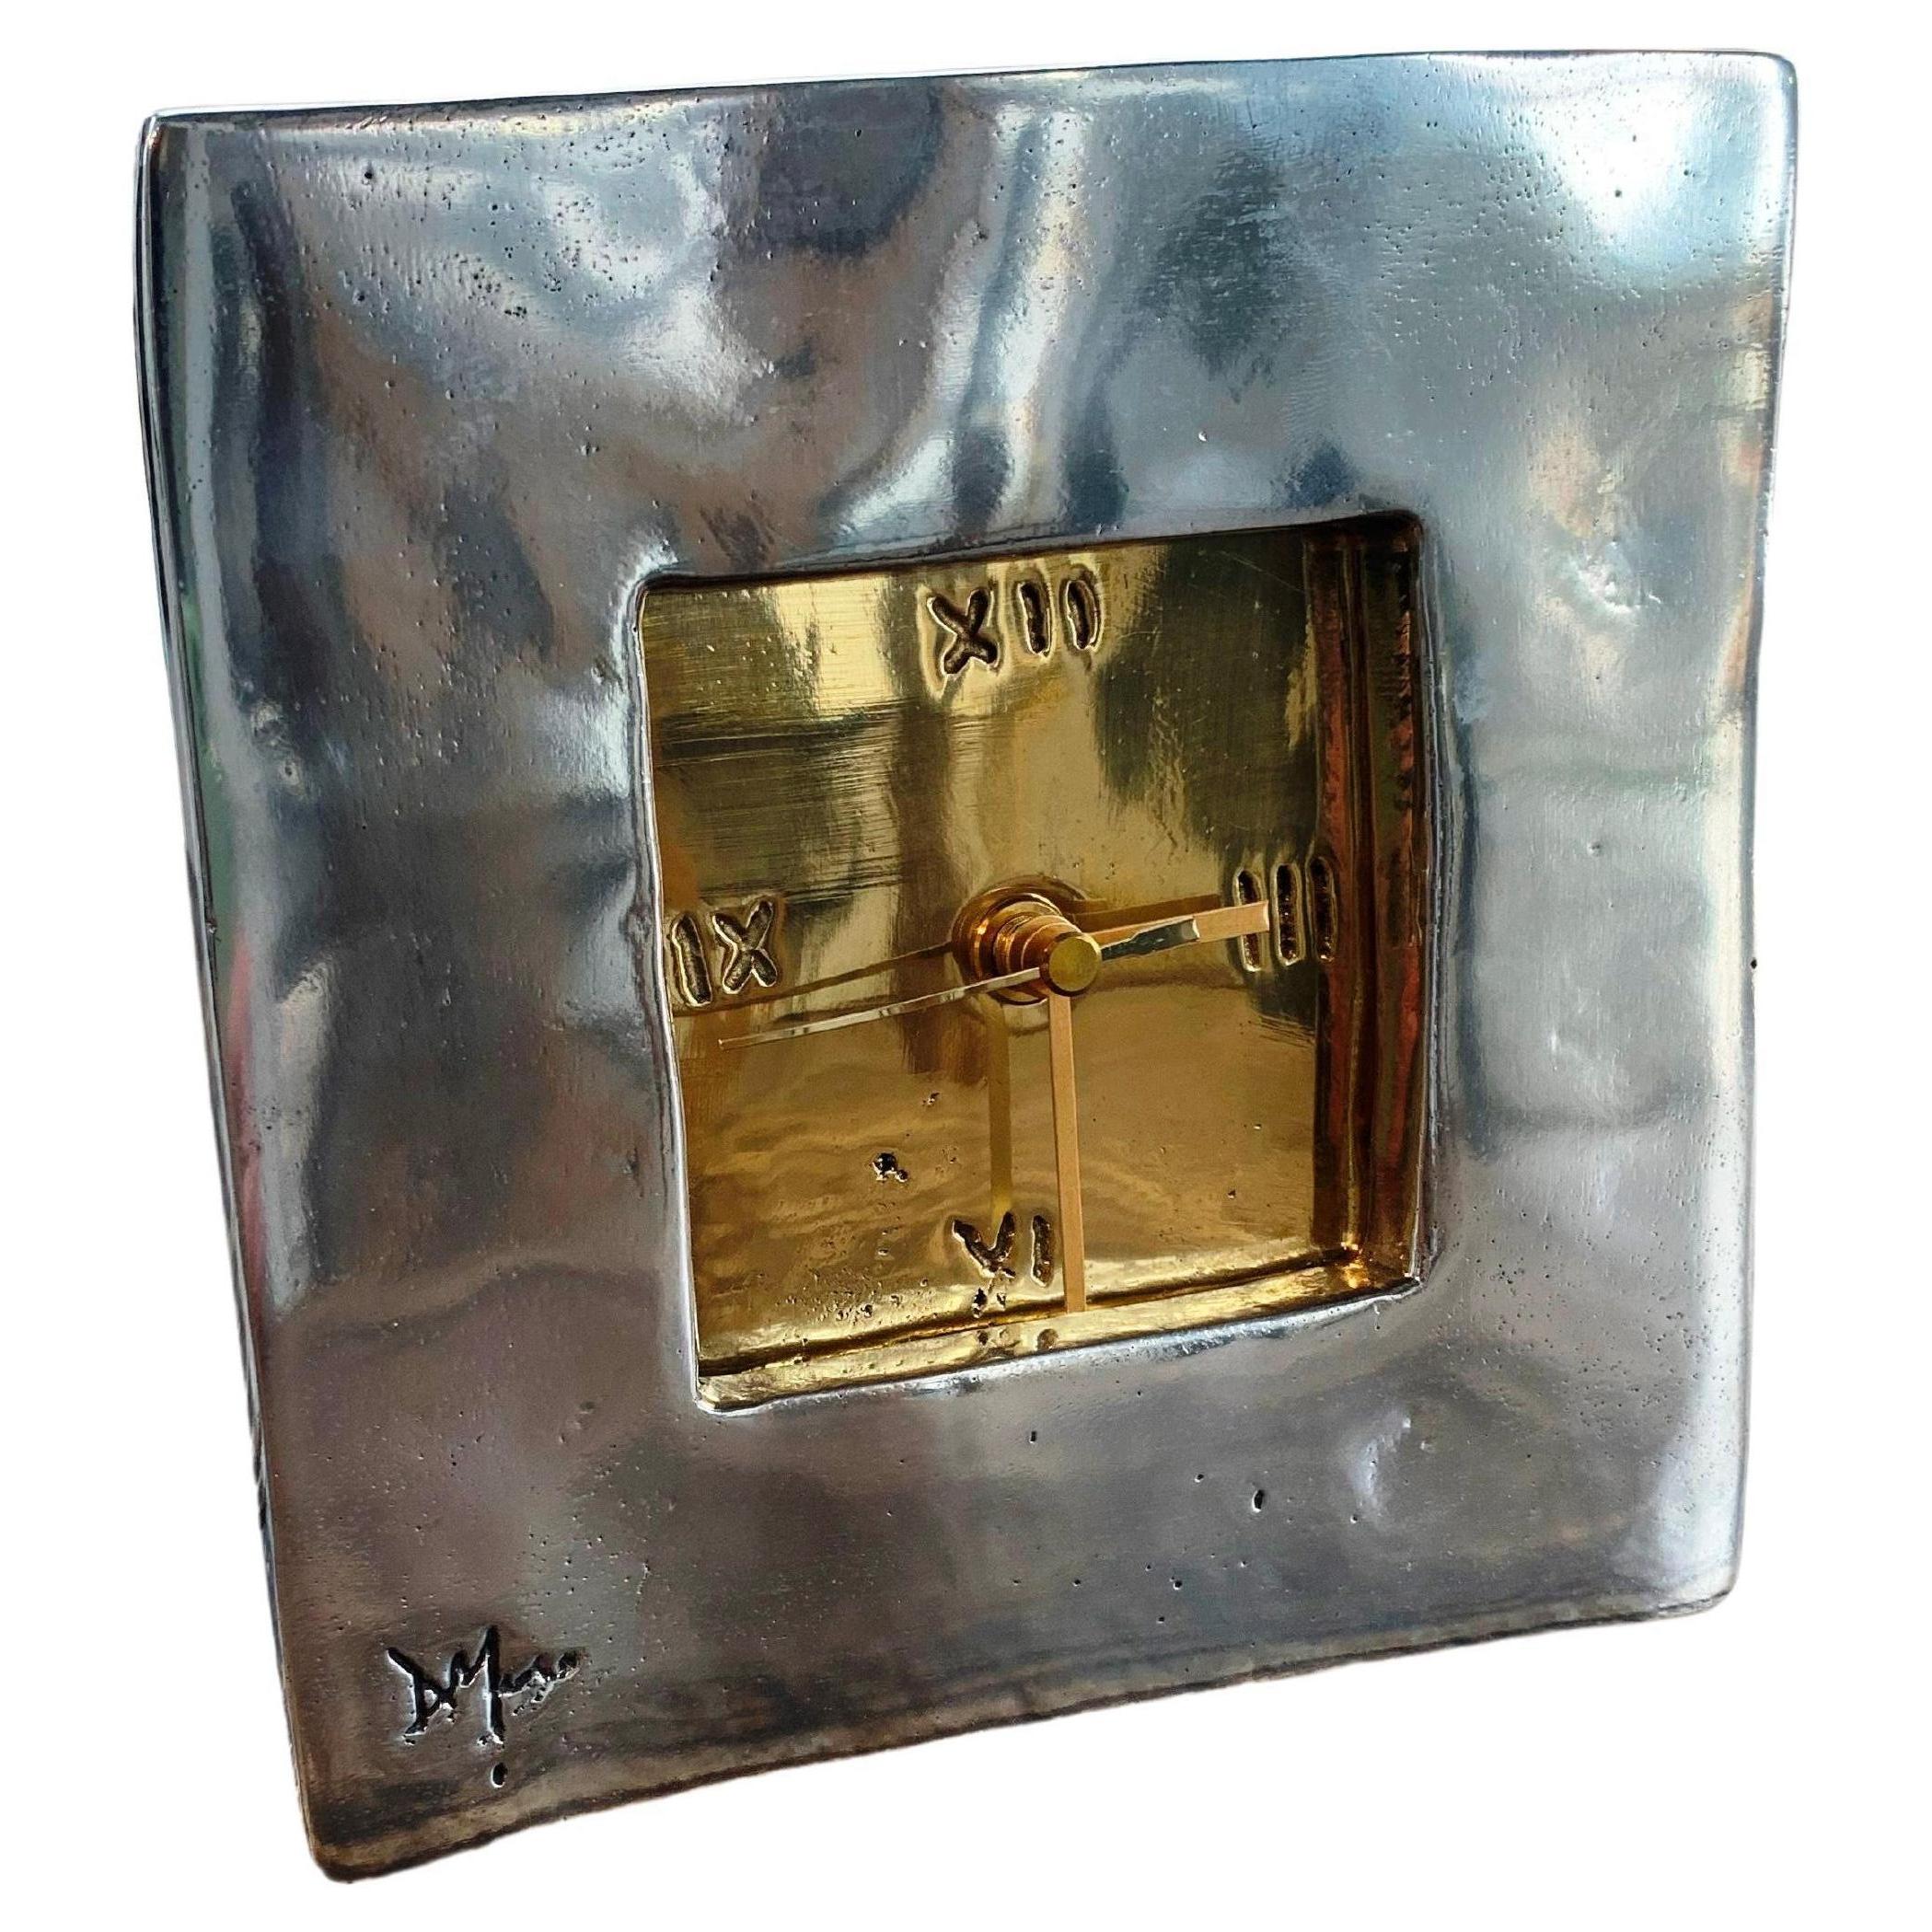 DO16 Square  Clock, Gold and aluminium coloured,  Solid cast Brass & Aluminium For Sale